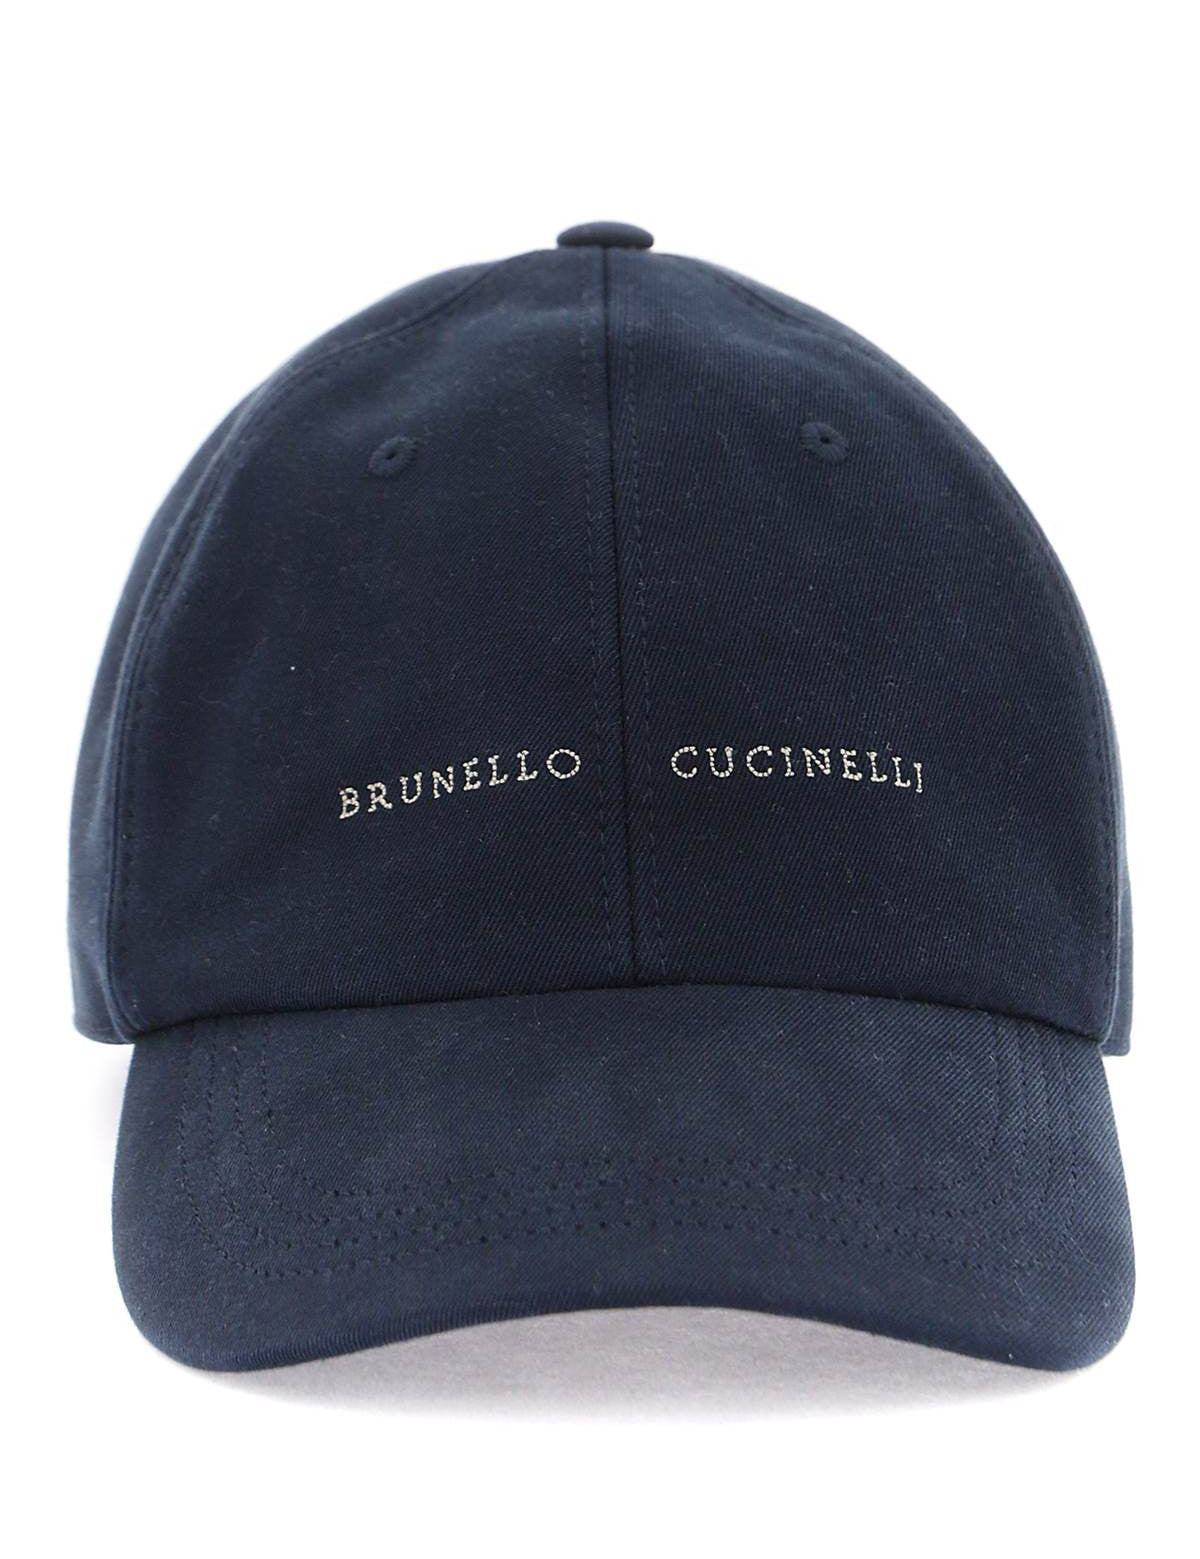 brunello-cucinelli-embroidered-logo-baseball-cap.jpg